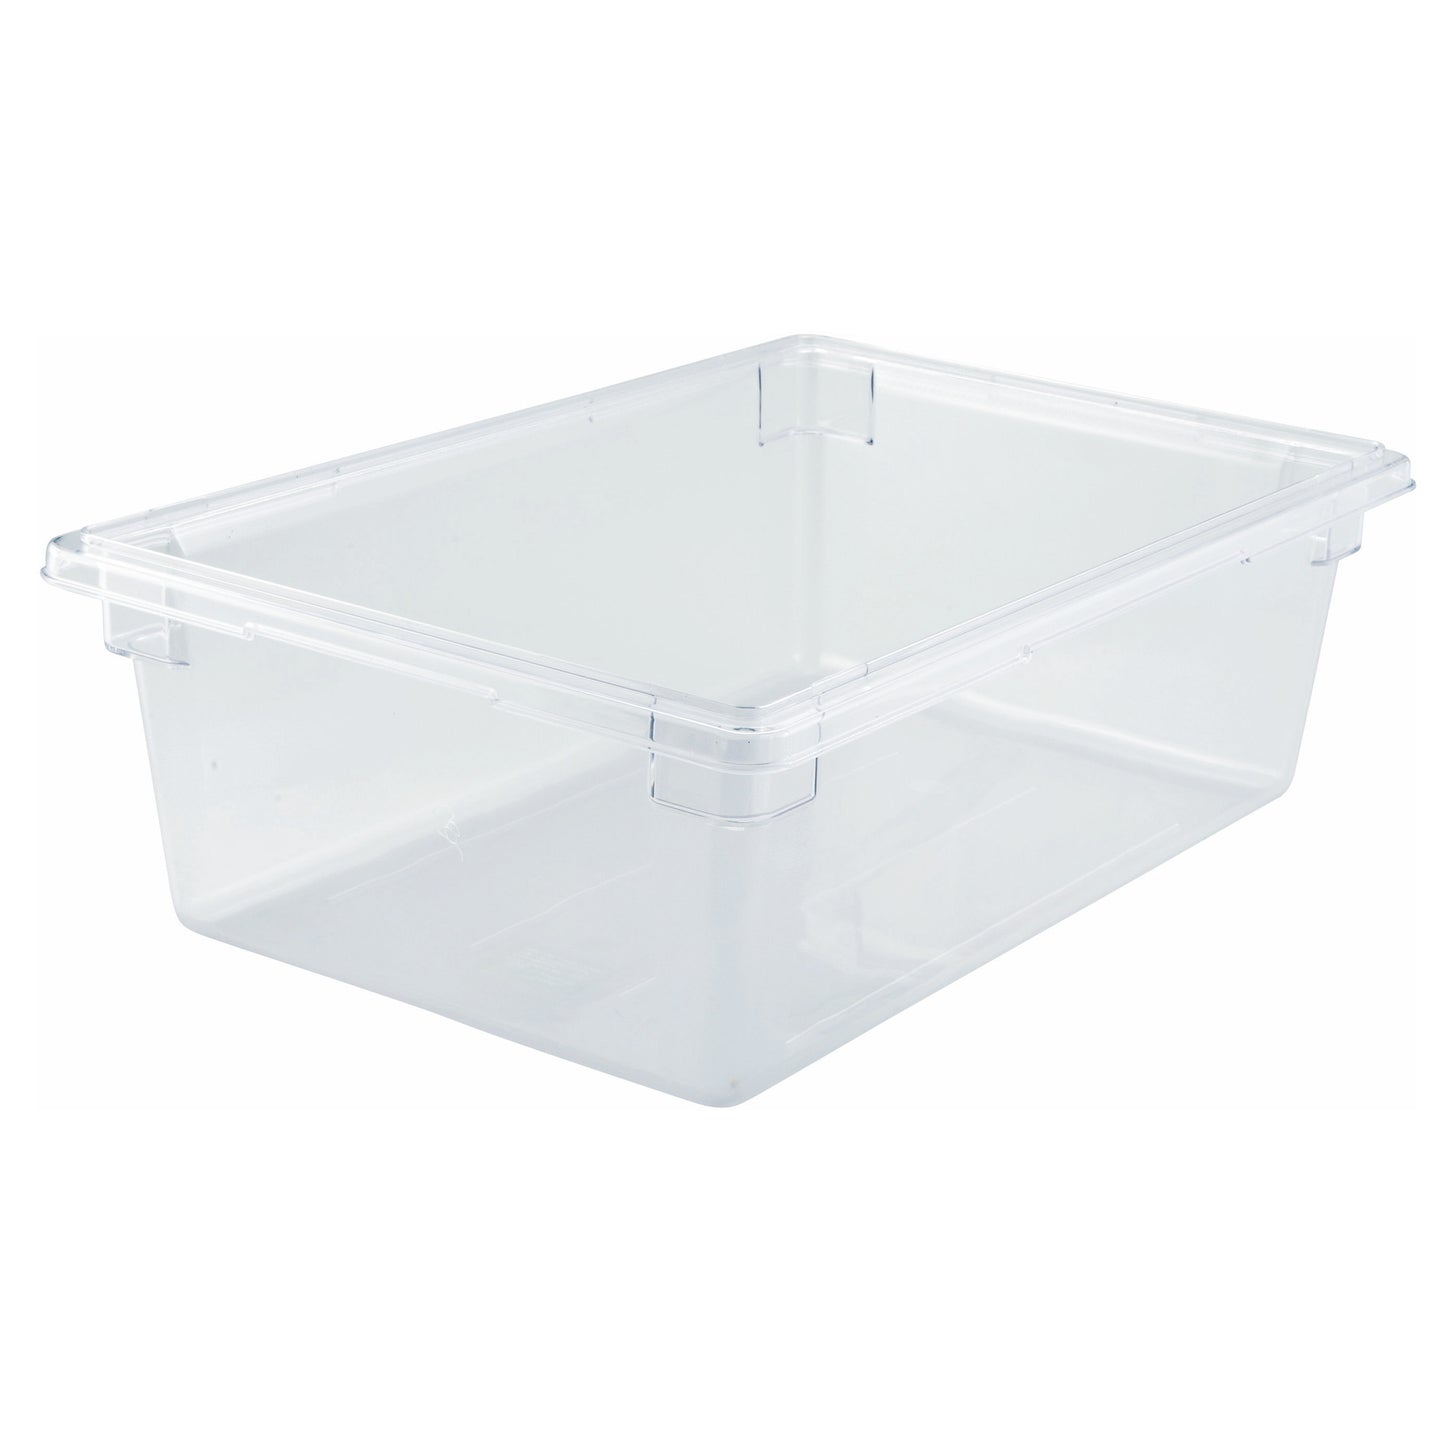 PFSF-9 - Food Storage Box, Clear Polycarbonate - Full, 9"